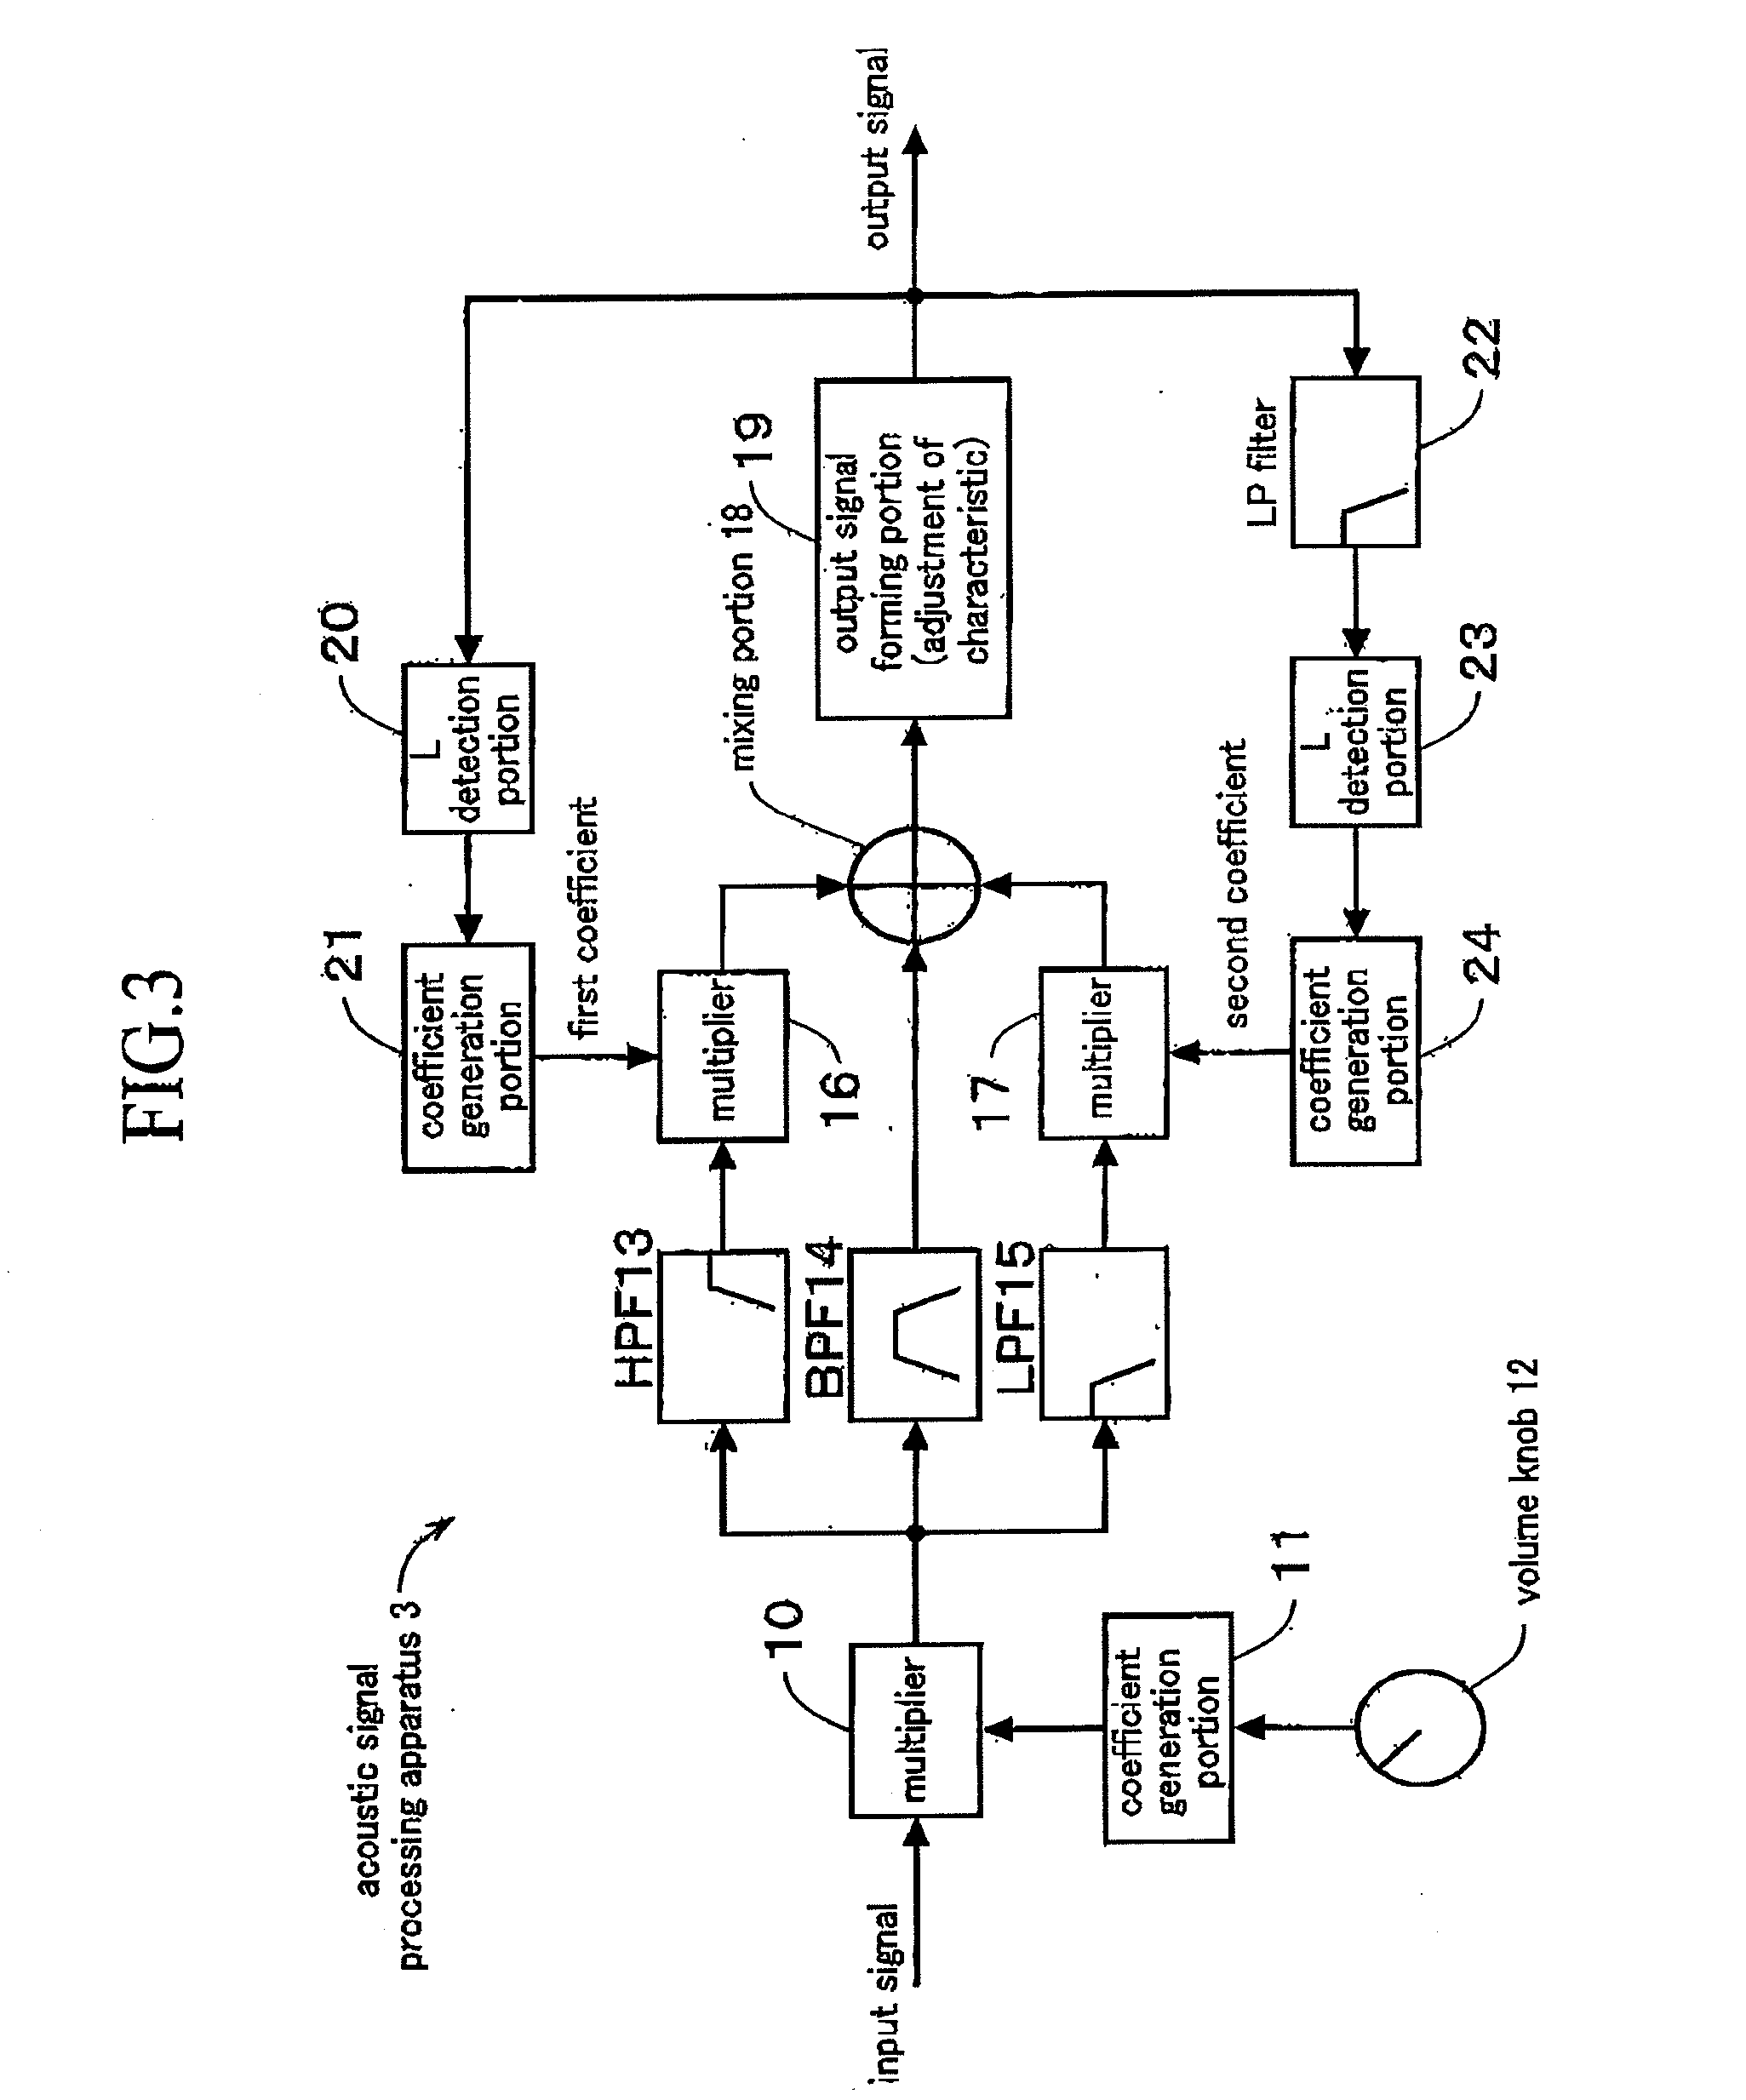 Acoustic signal processing apparatus